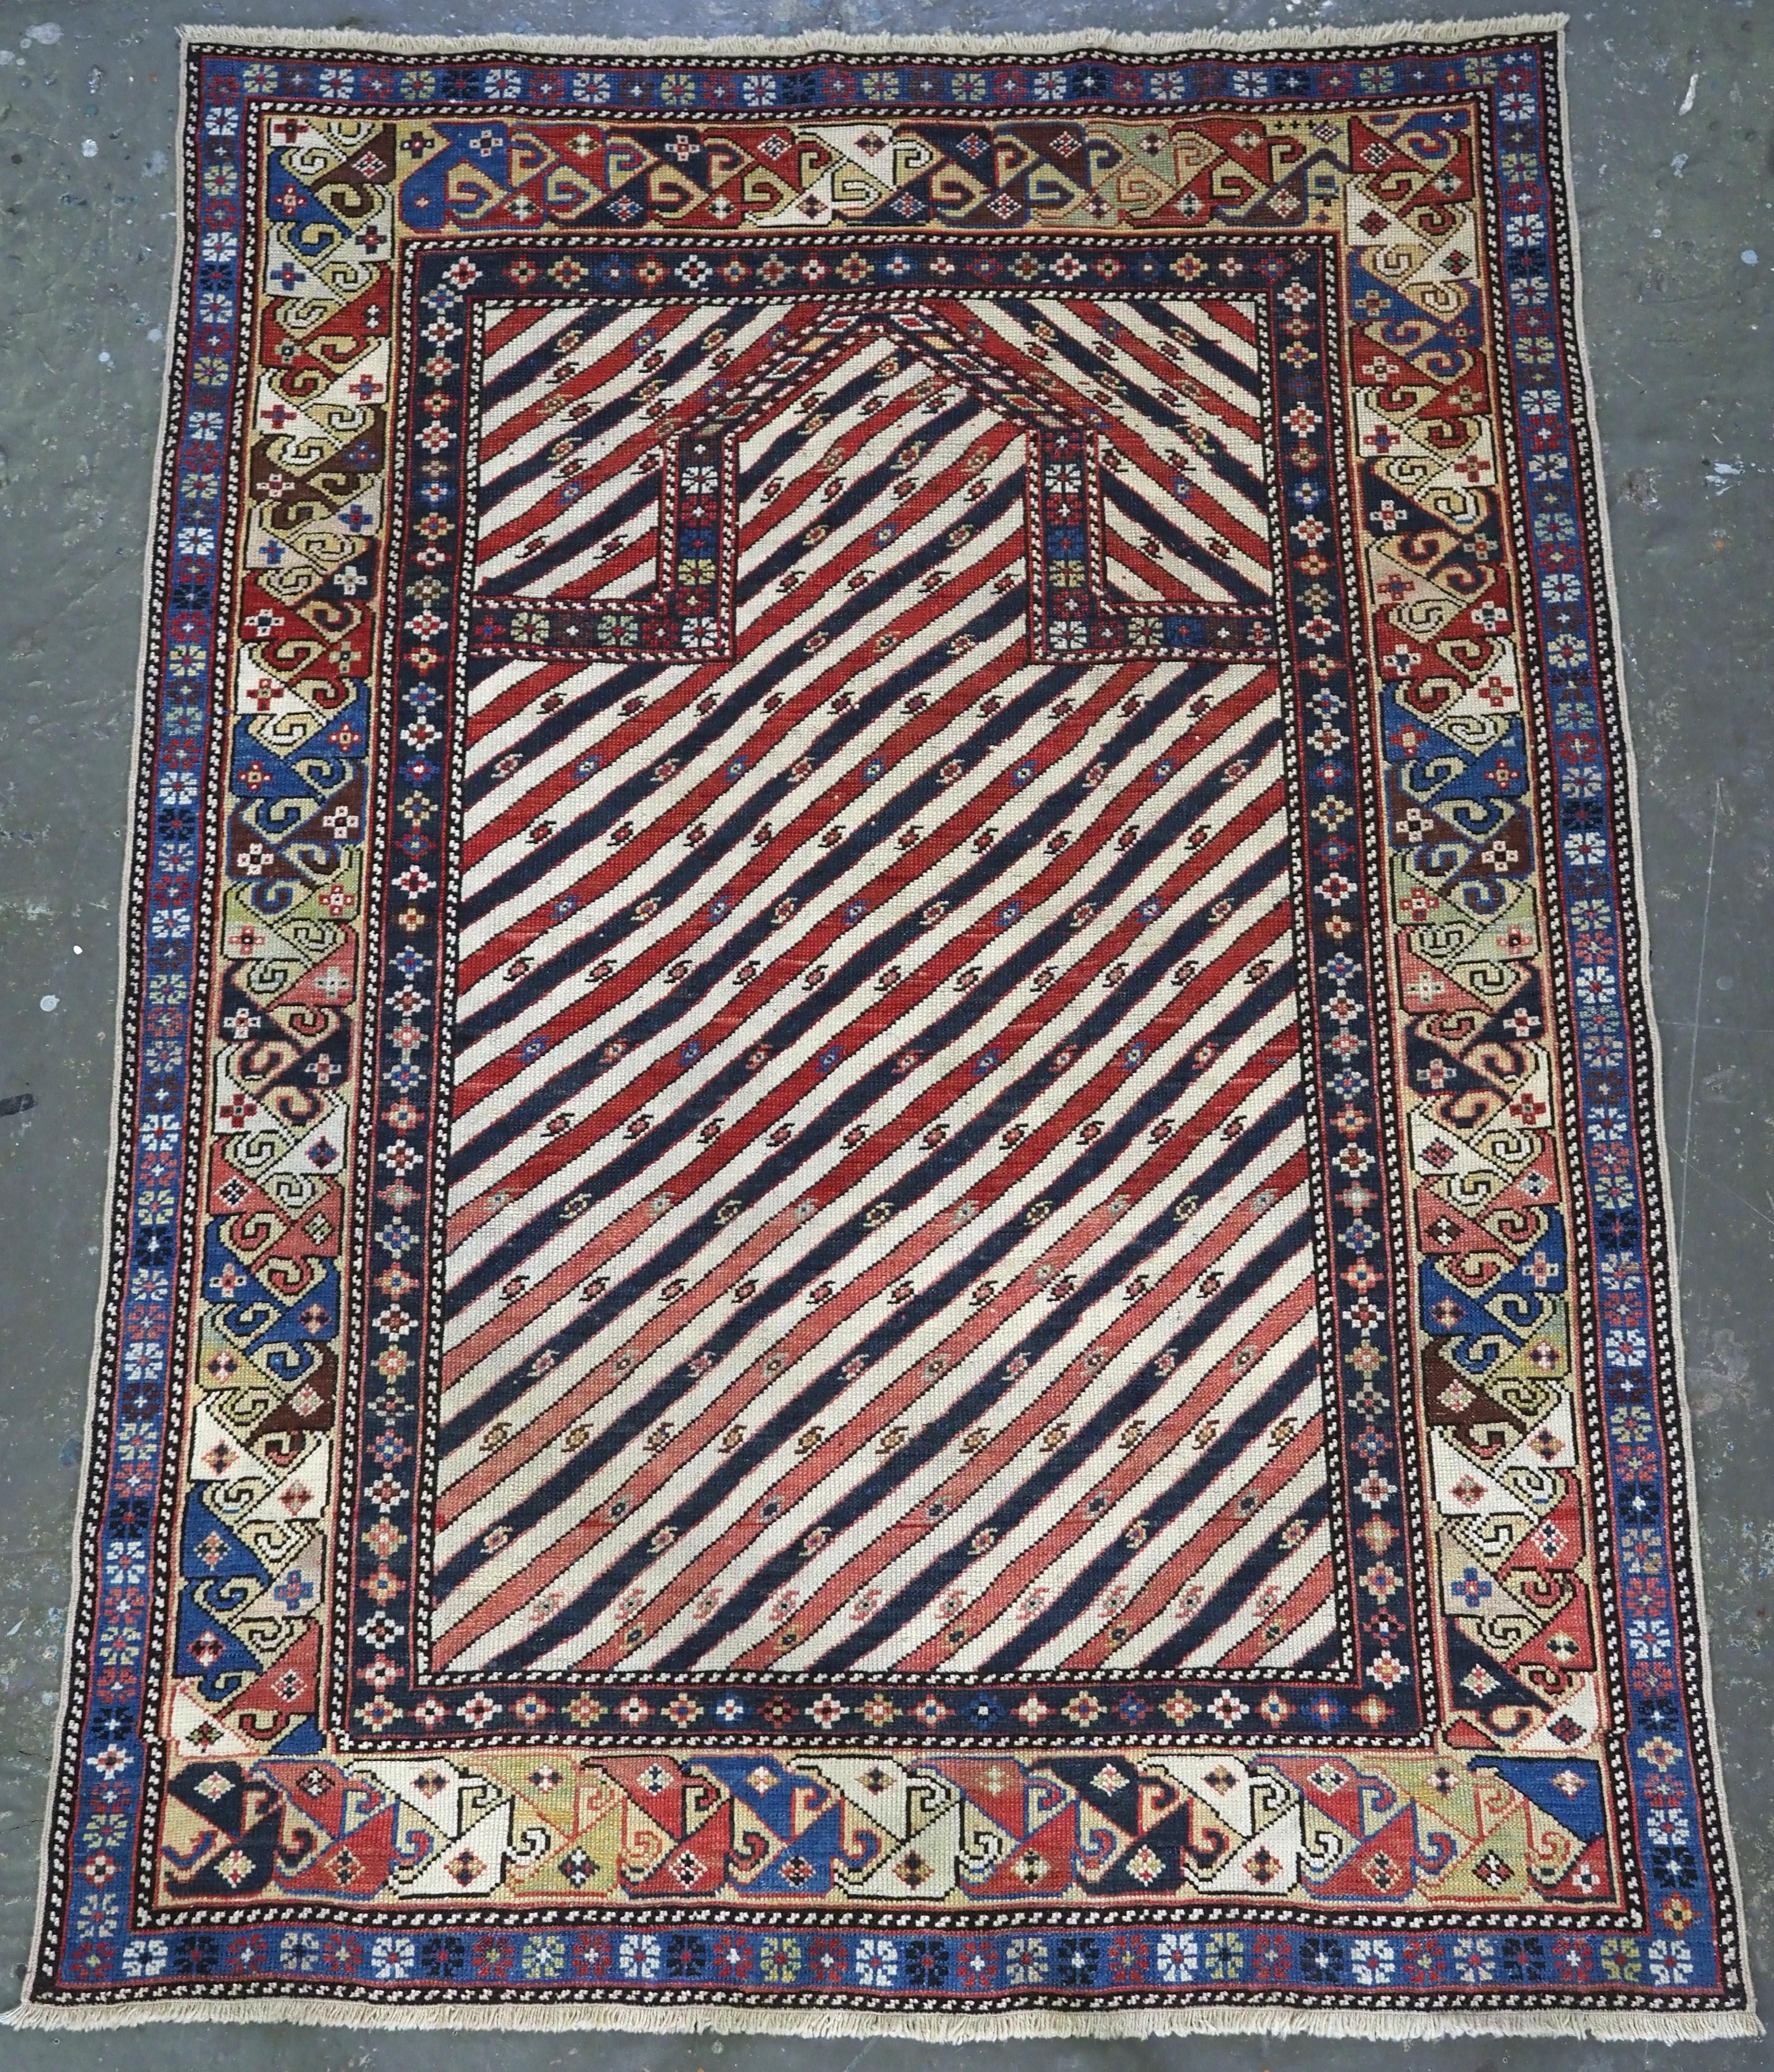 Late 19th Century Antique Caucasian Shirvan/Dagestan prayer rug with scarce diagonal stipe design. For Sale